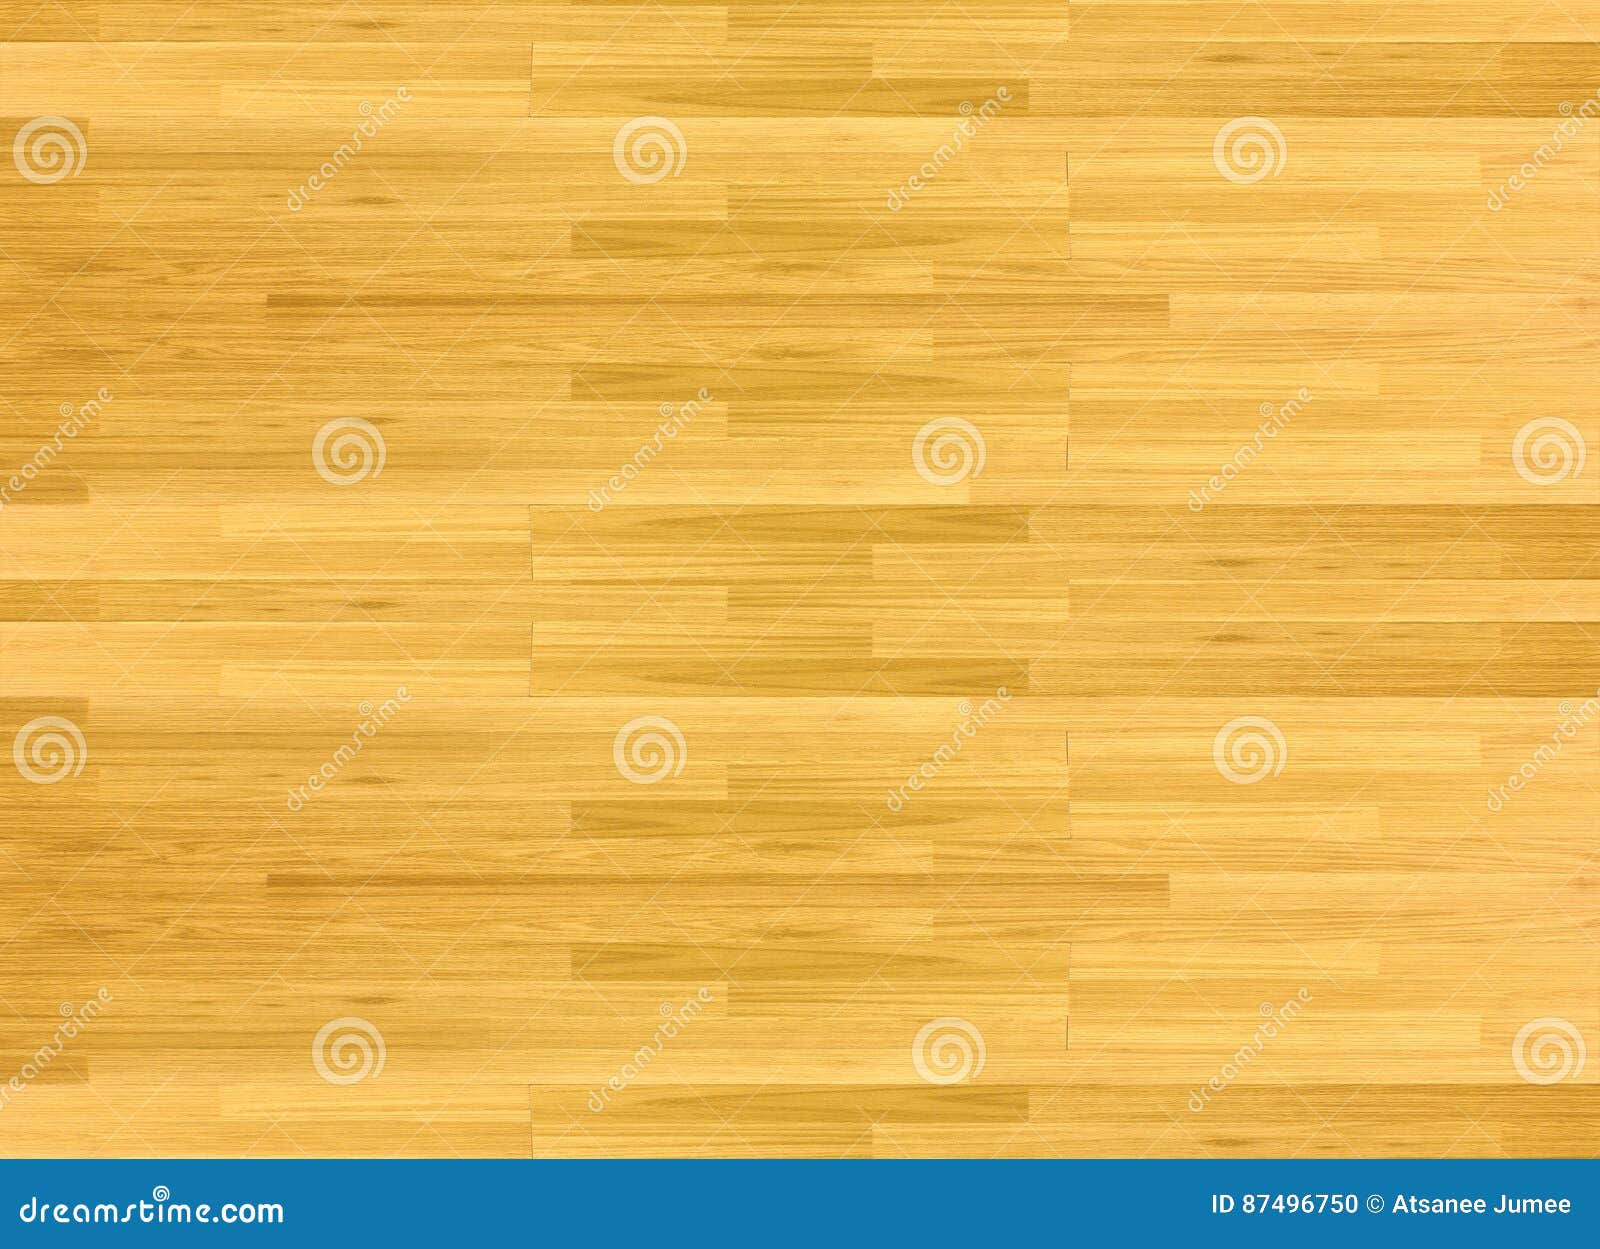 Texture Of Wood Background Closeup Hardwood Maple Basketball Court